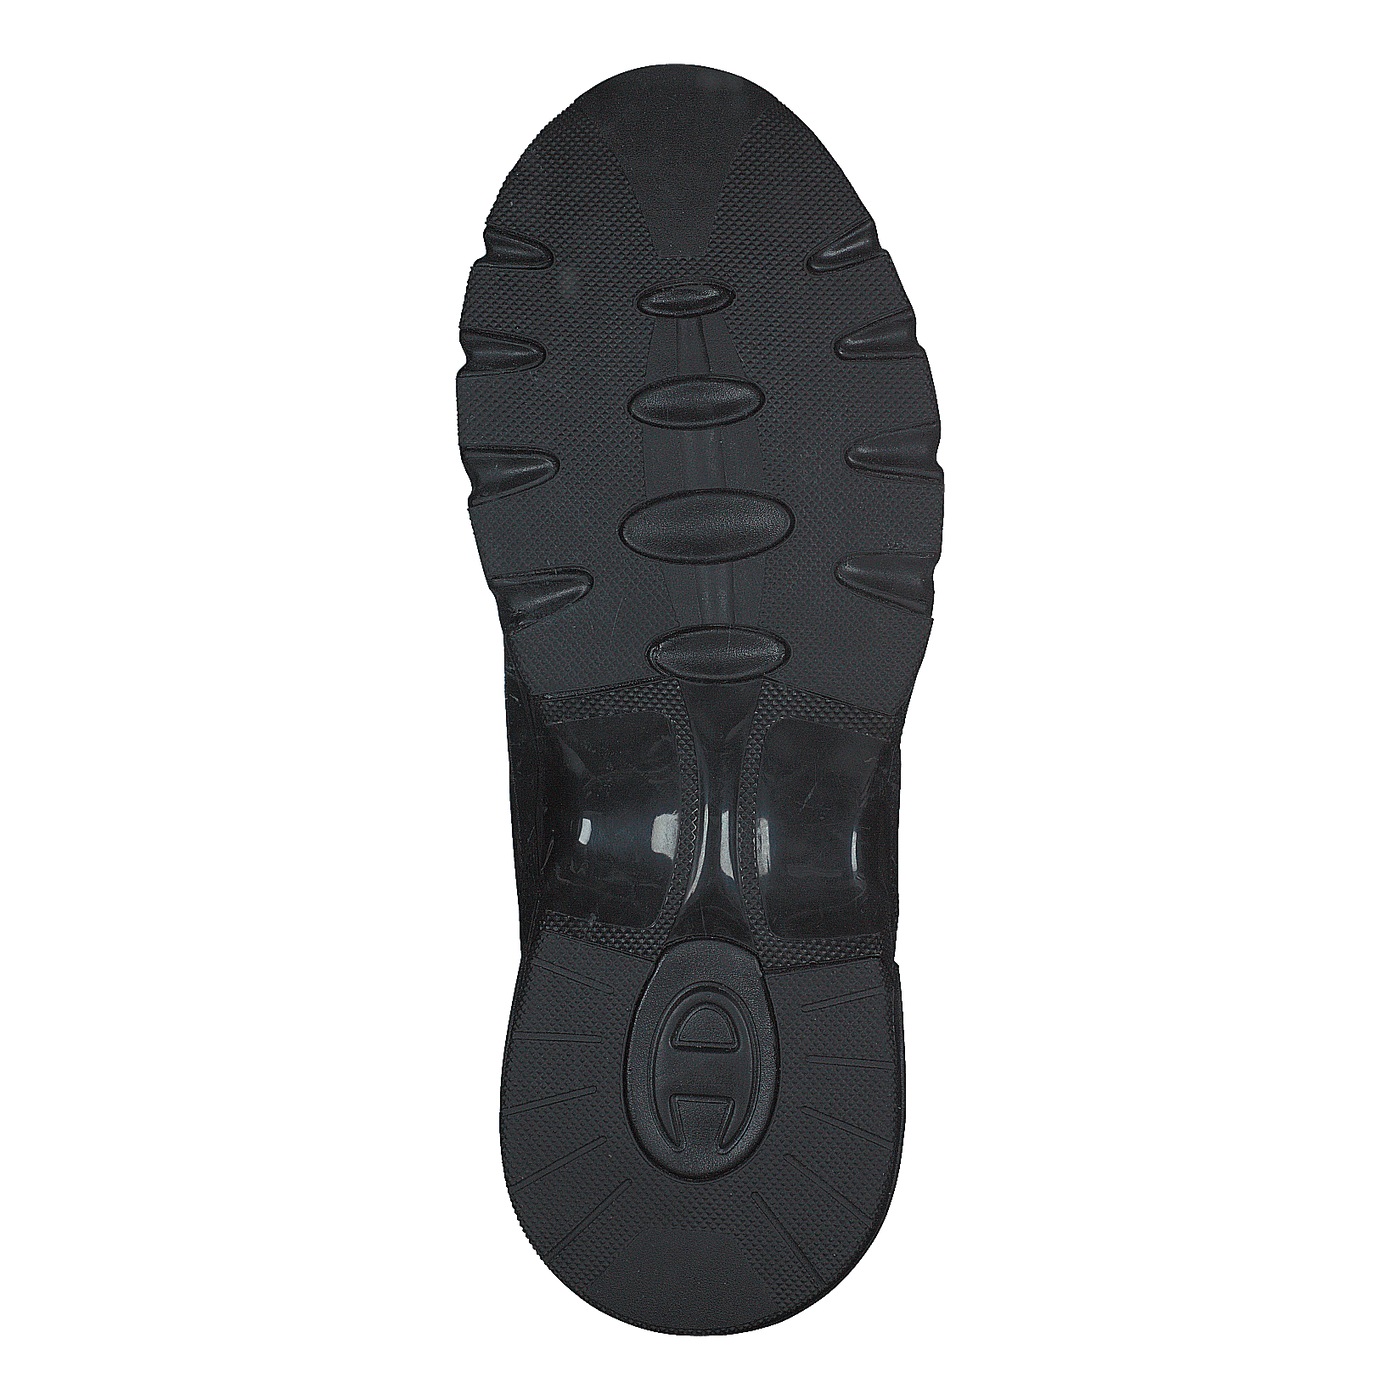 Low Cut Shoe Cwa-1 Leather Kk001